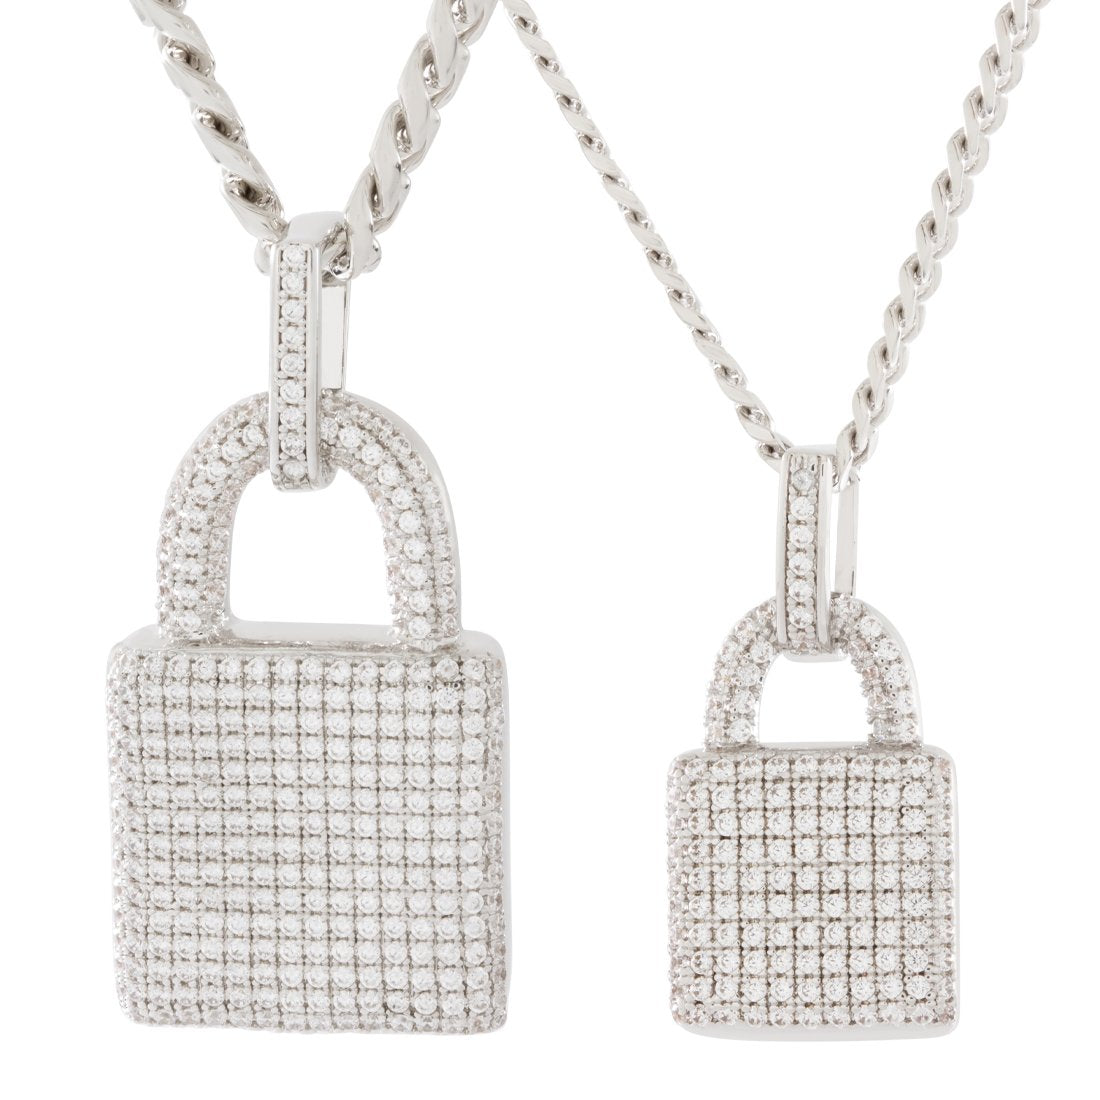 14K White Gold Diamond Padlock Pendant P11168W, Priddy Jewelers